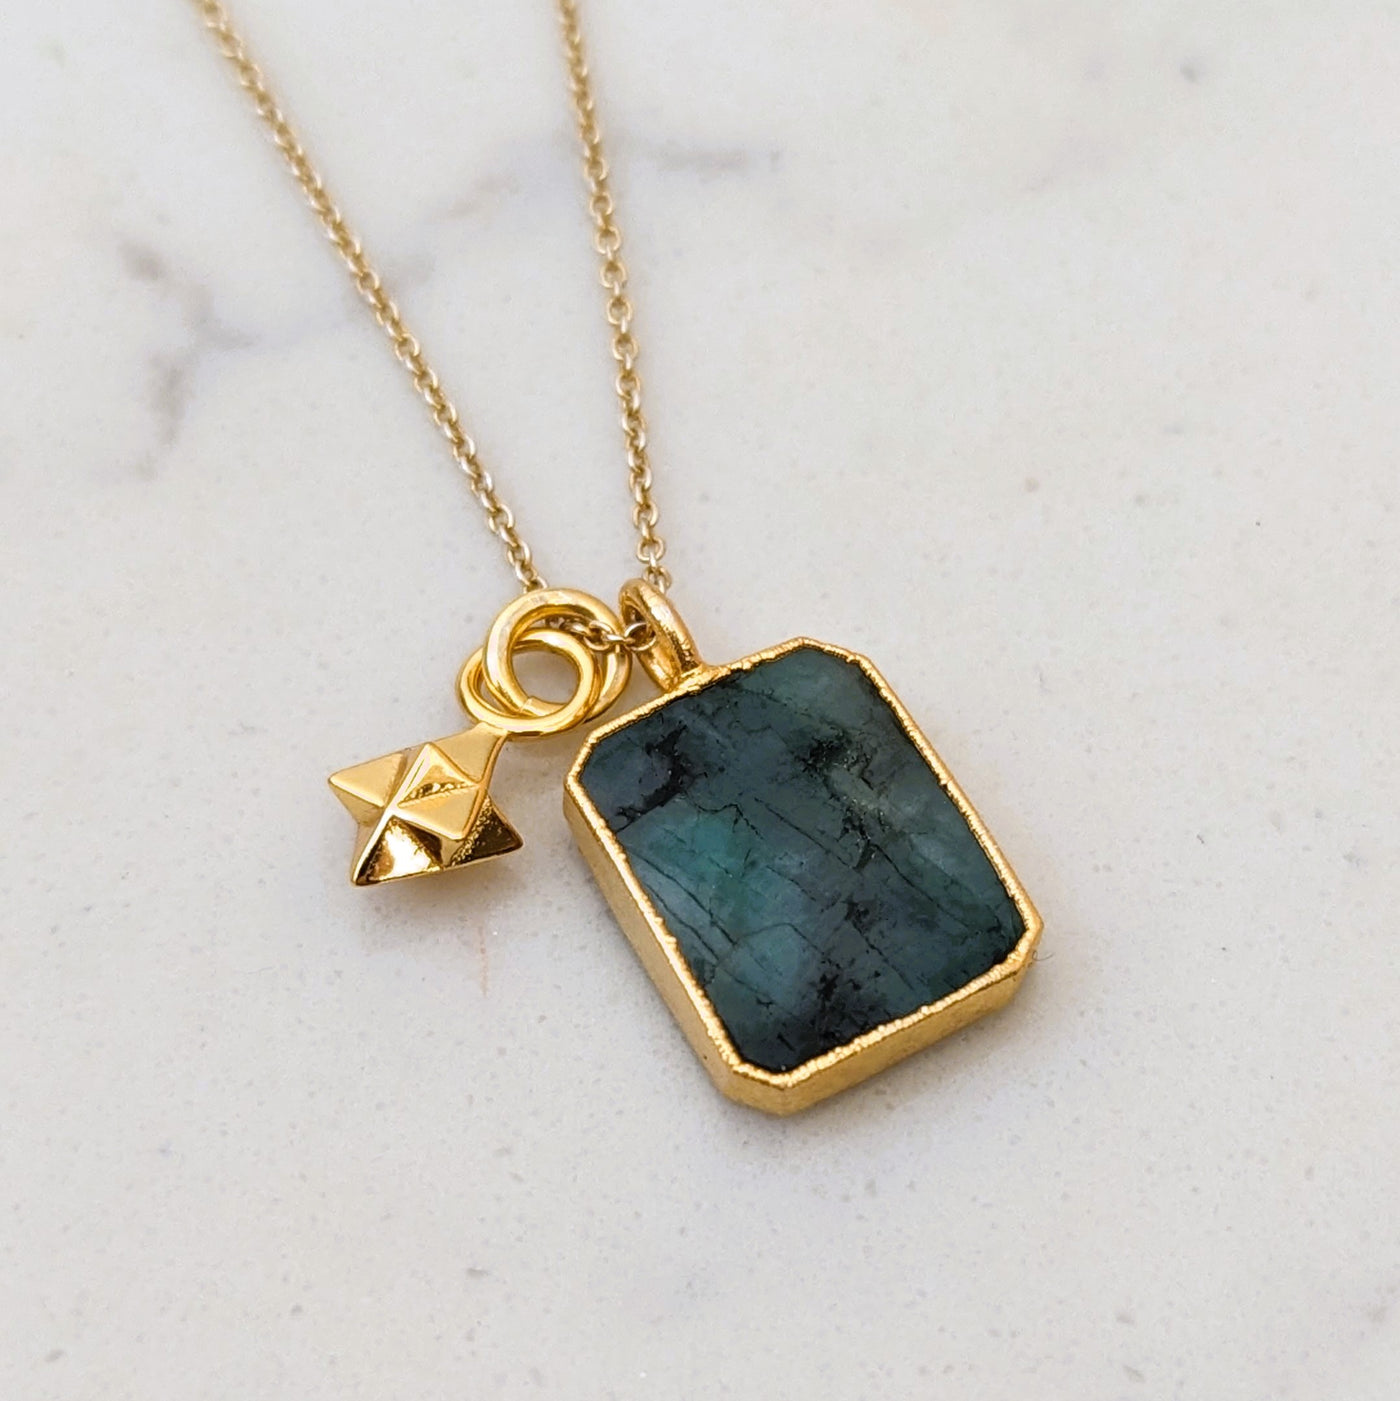 emerald and tetrahedron gemstone pendant necklace